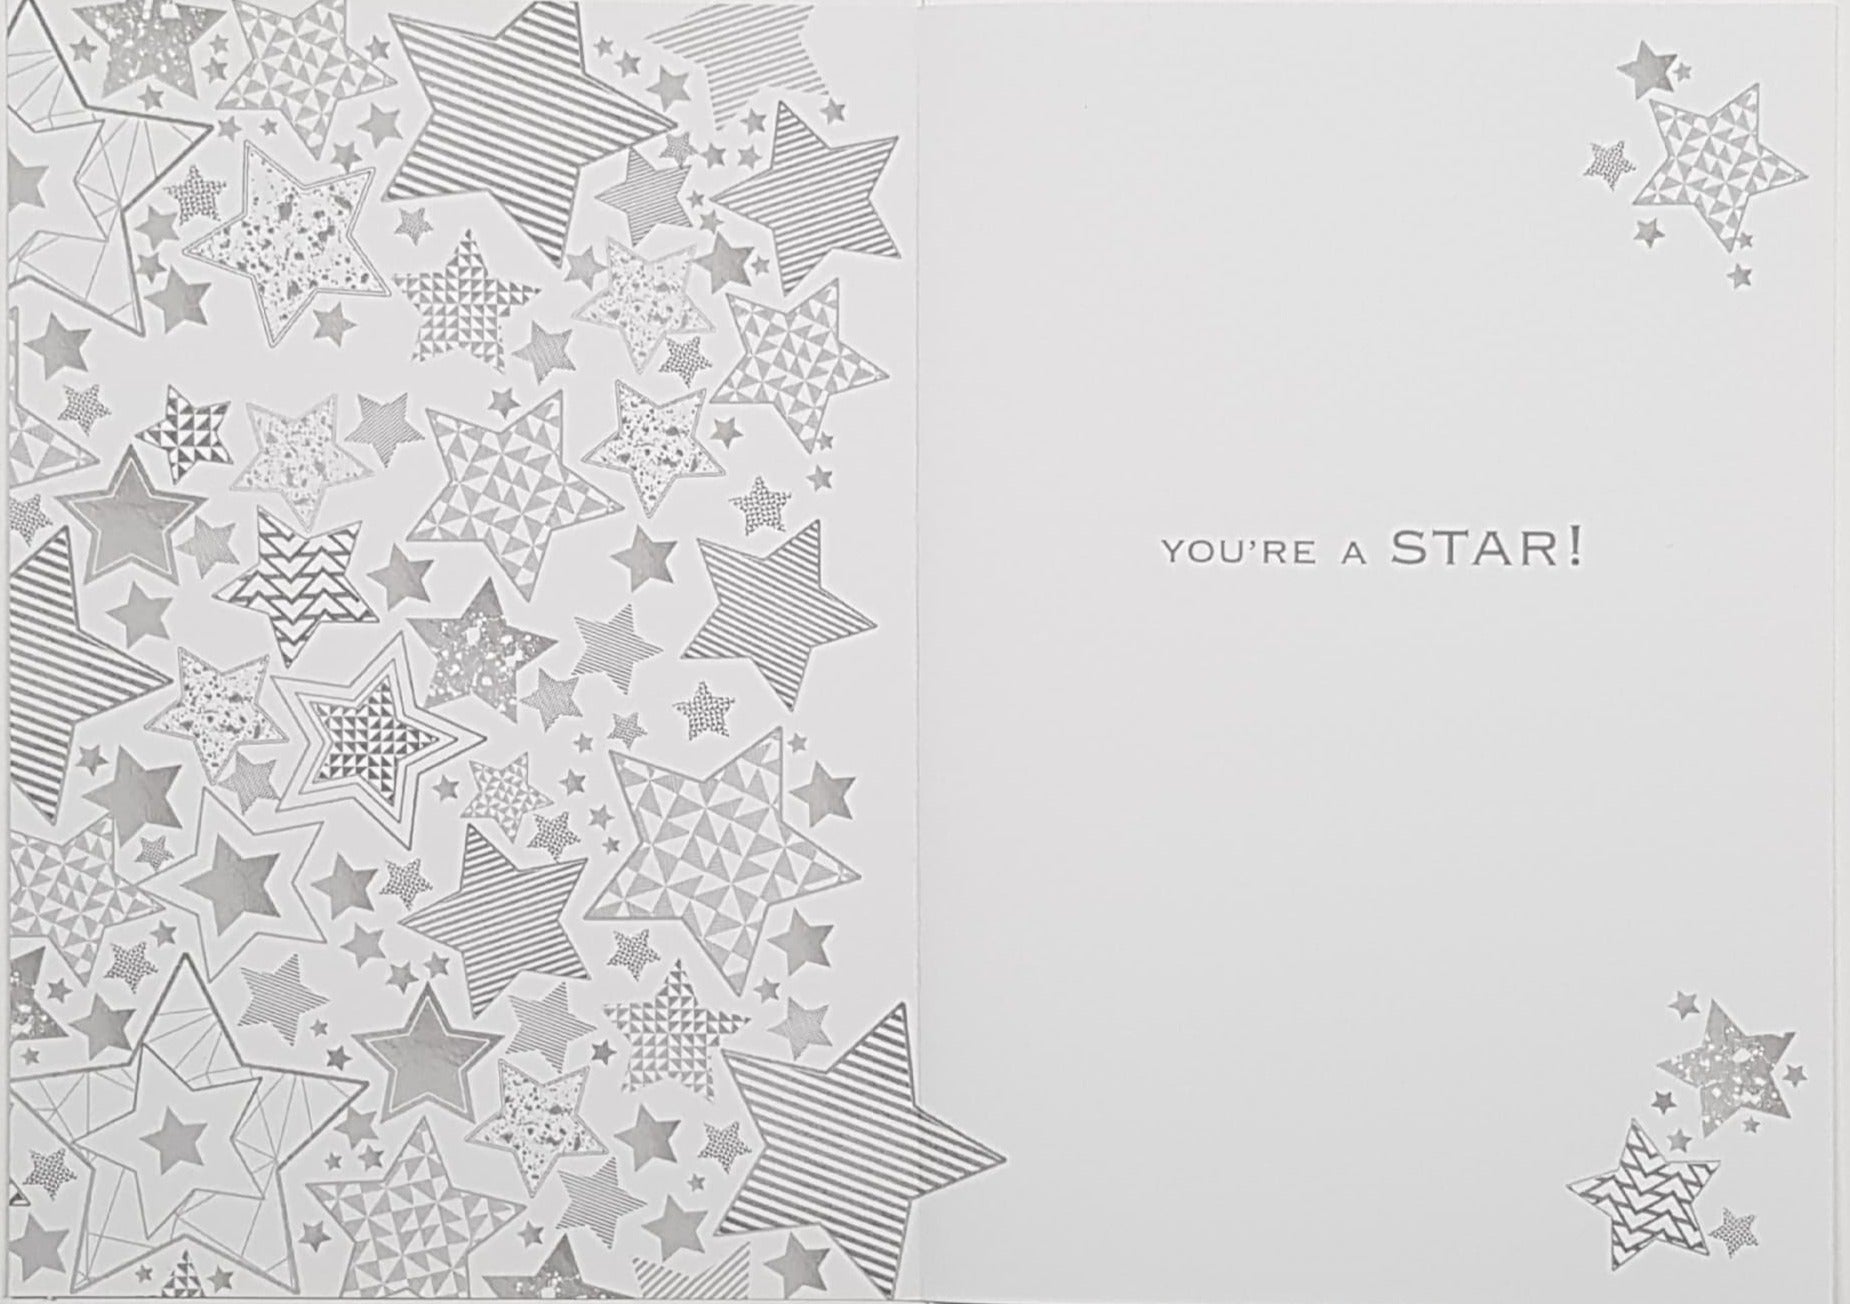 Congratulations Card - Silver & Gold Shiny Stars & A Grey Banner